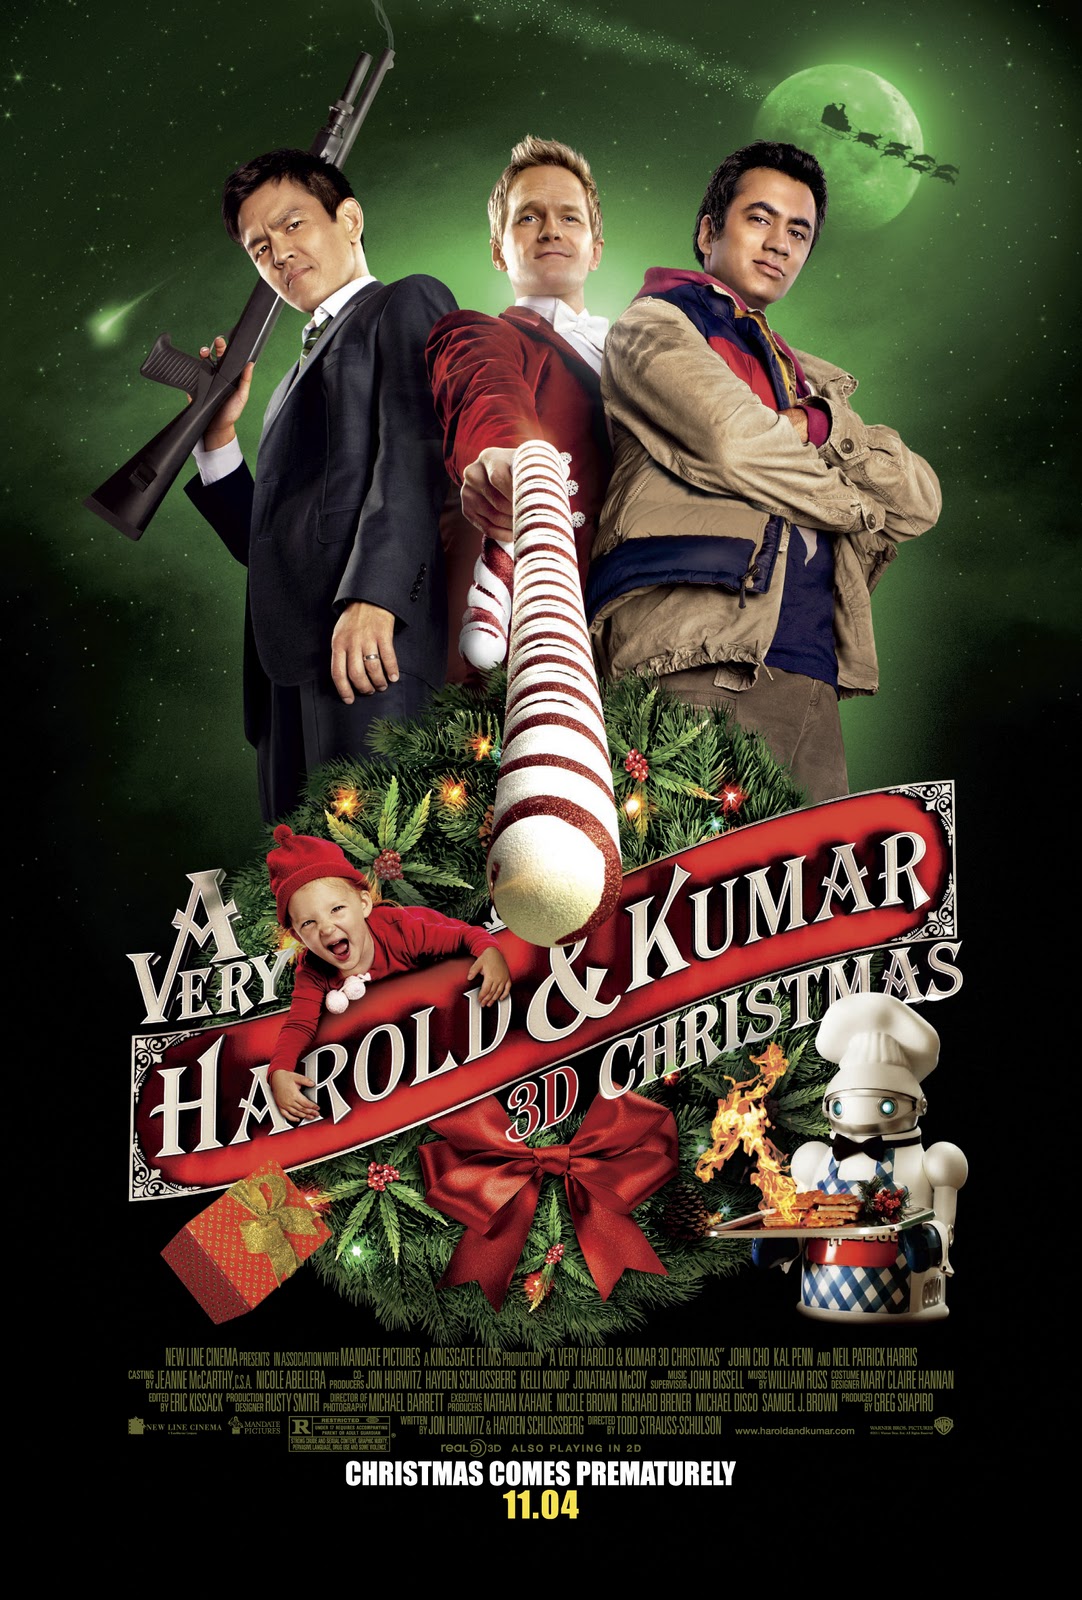 https://blogger.googleusercontent.com/img/b/R29vZ2xl/AVvXsEhfKkU86VfbHDzEjmExlhWcqM9IAGm73ErTic8iGDsXy6cbiLDZx0zsoFh4azYnrQBHIsCX1bnUtI4a9jbVQKZcGDgtQrSSiOX5qWLhNsy1oQNXiZiXbDzzqtdl4WmaKi91sIYytDVzbpl2/s1600/very-harold-kumar-christmas-movie-poster.jpg